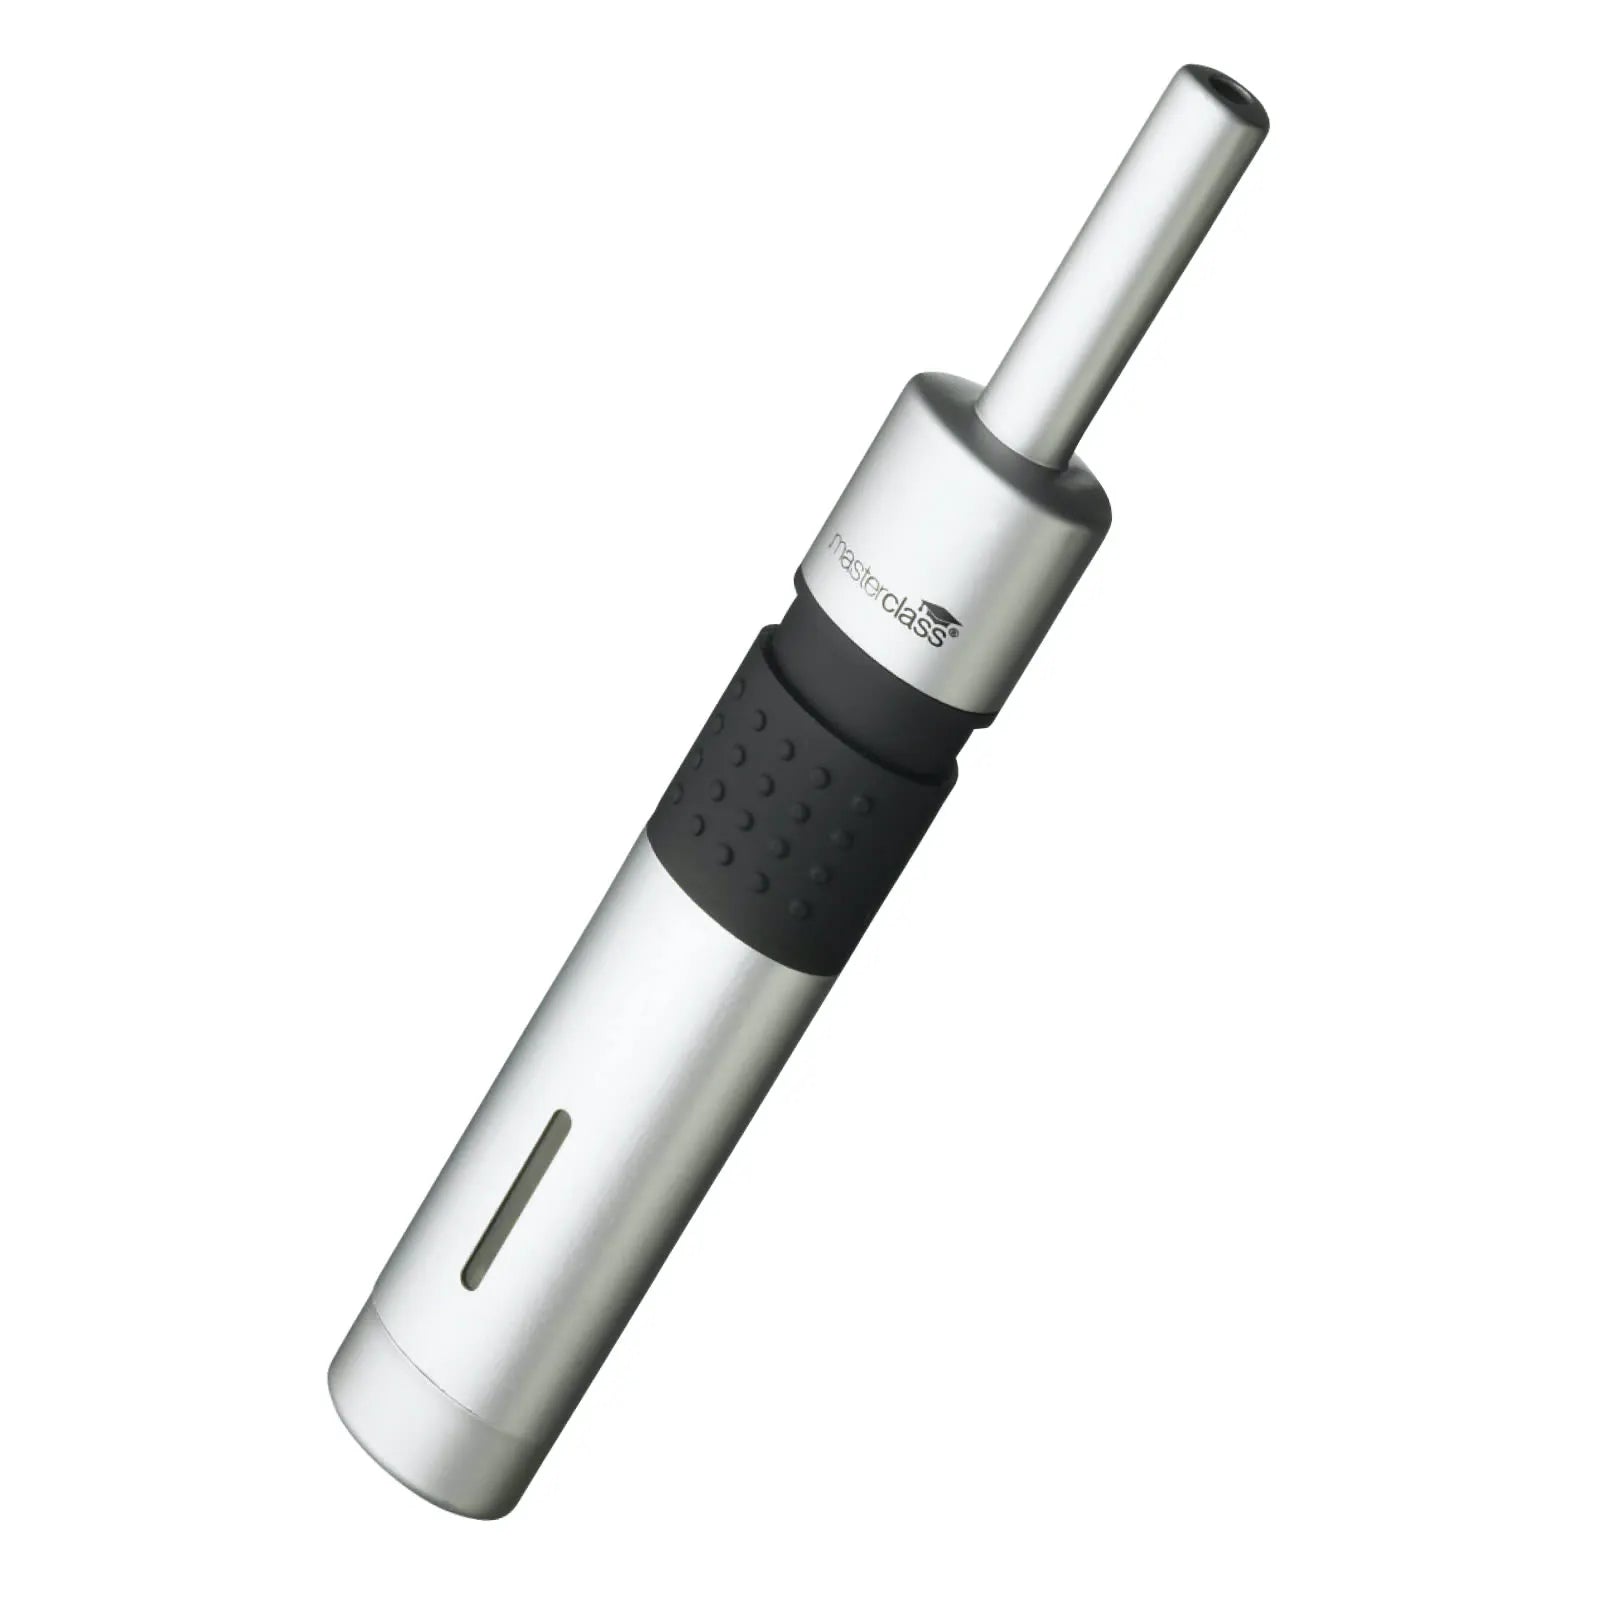 Masterclass Butane Long Reach Refillable Gas Lighter